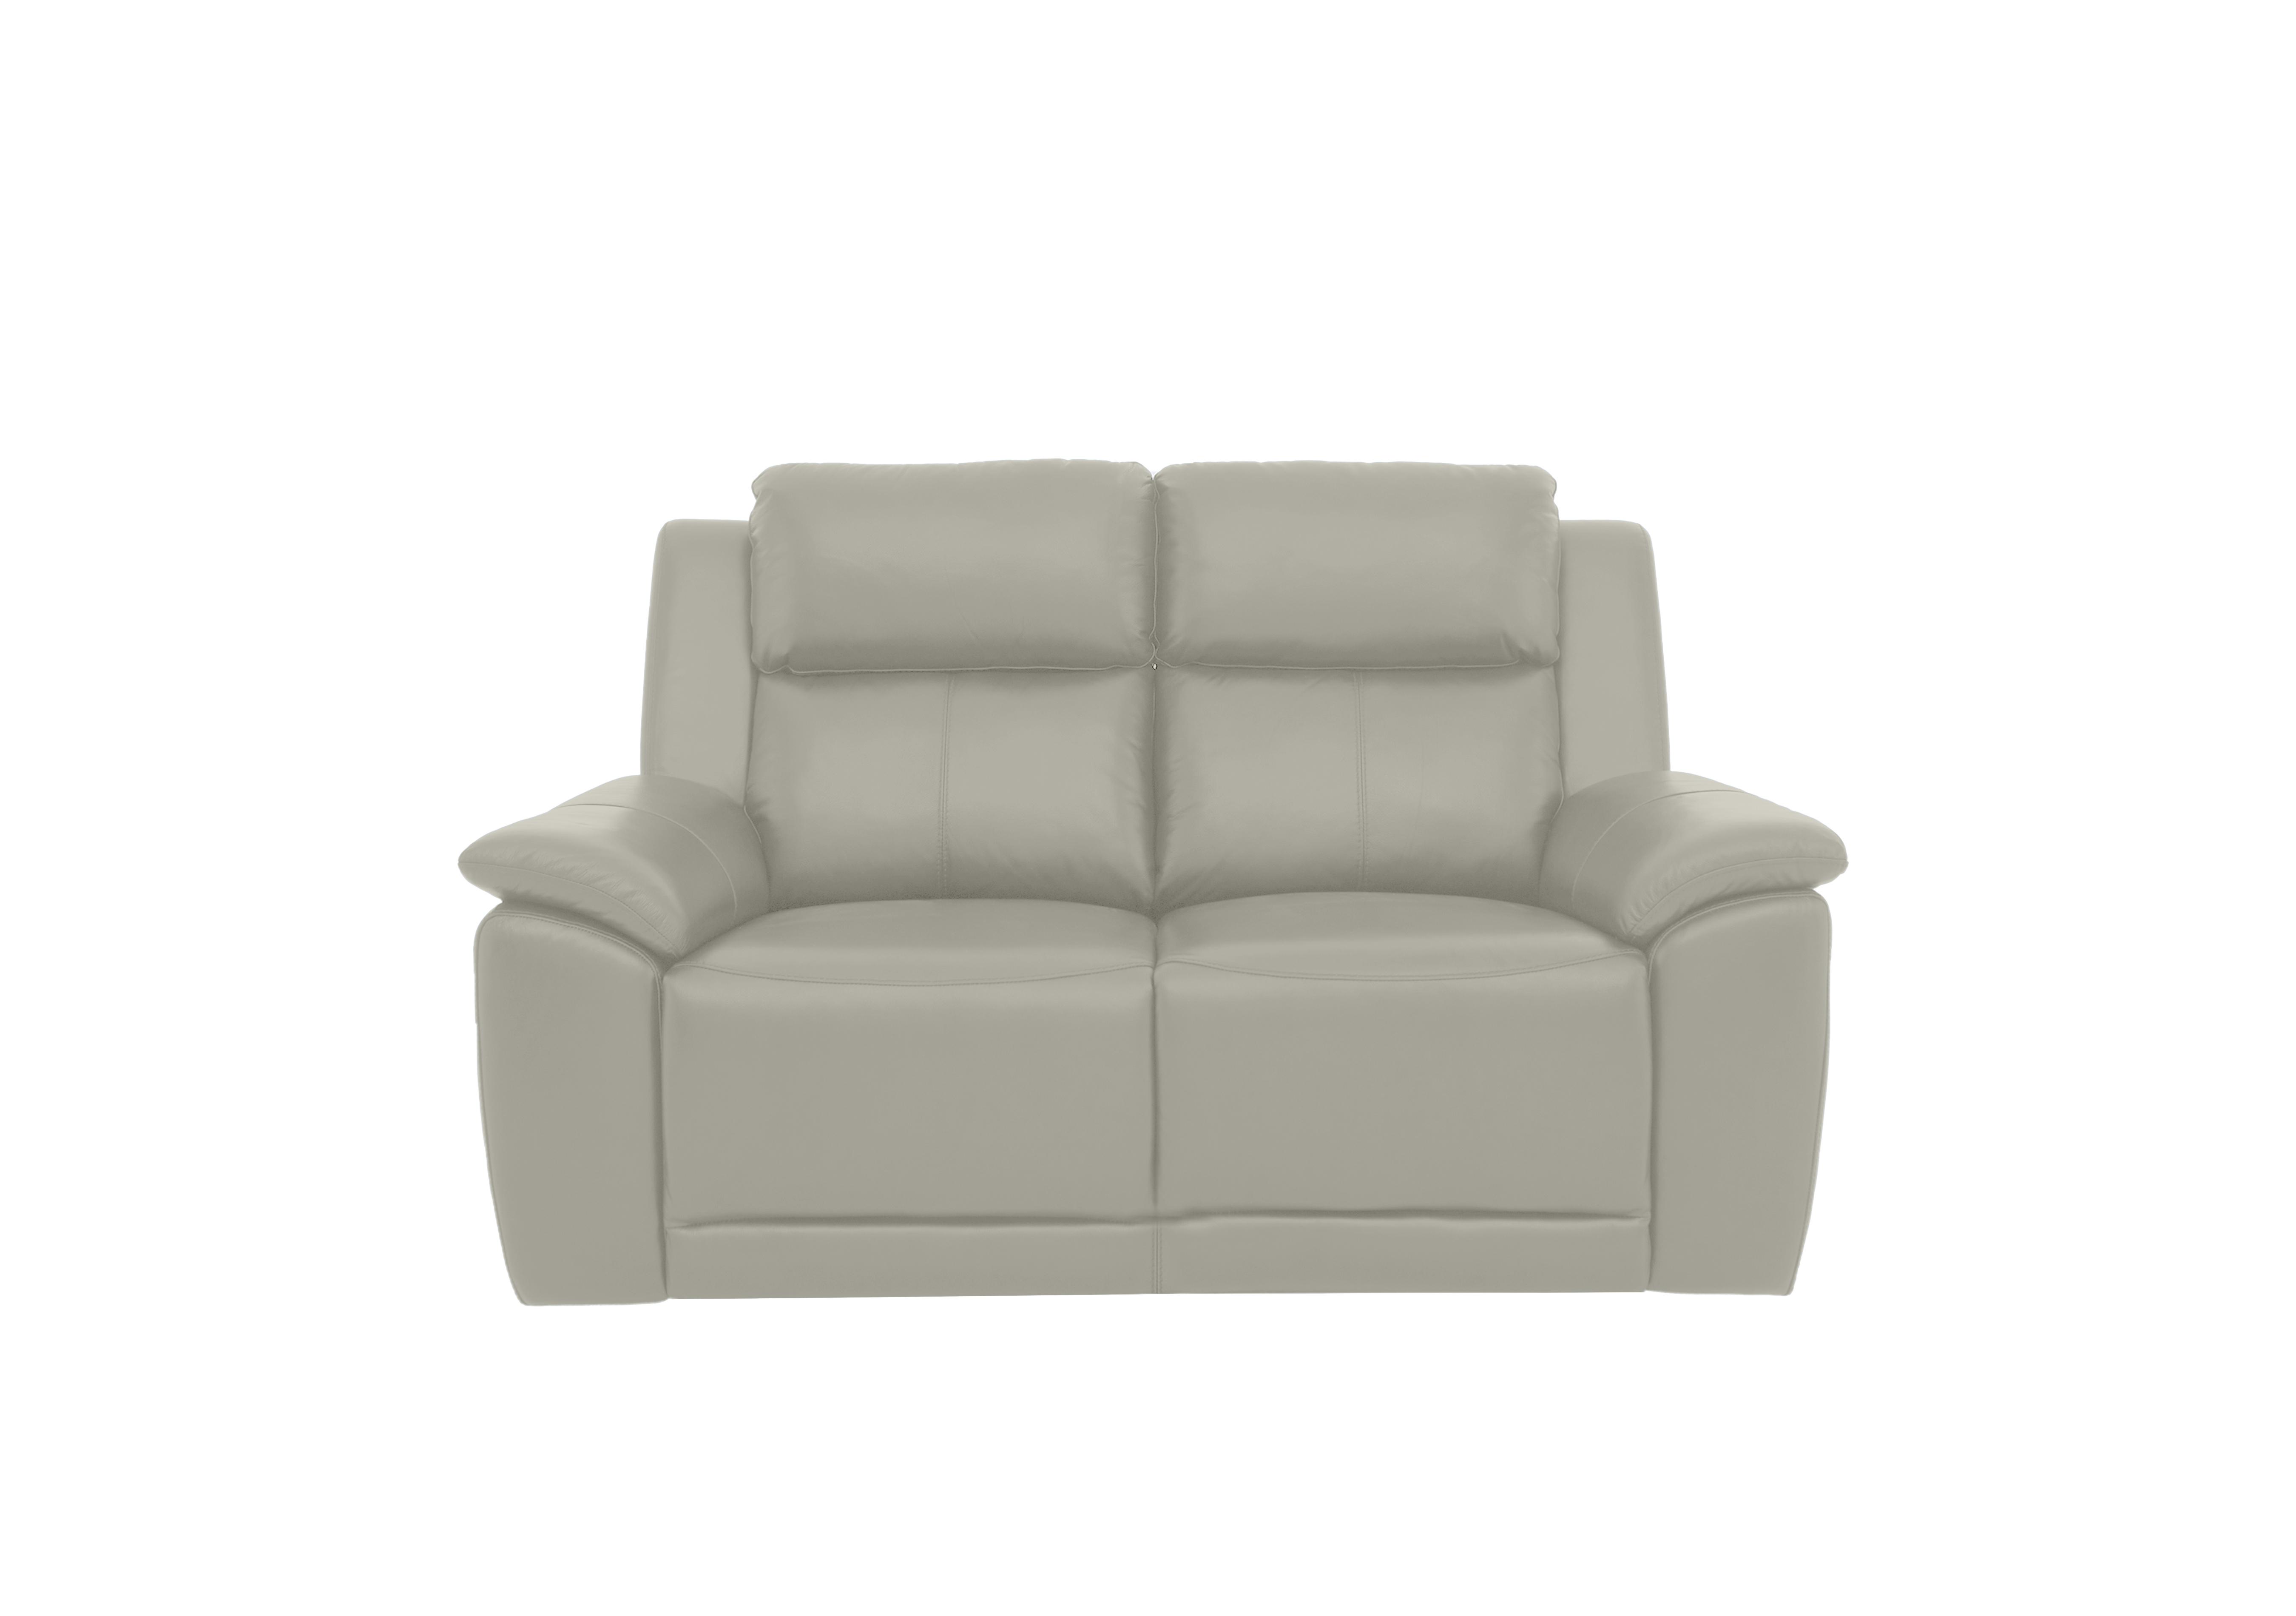 Utah 2 Seater Leather Sofa in Sand Le-9303 on Furniture Village